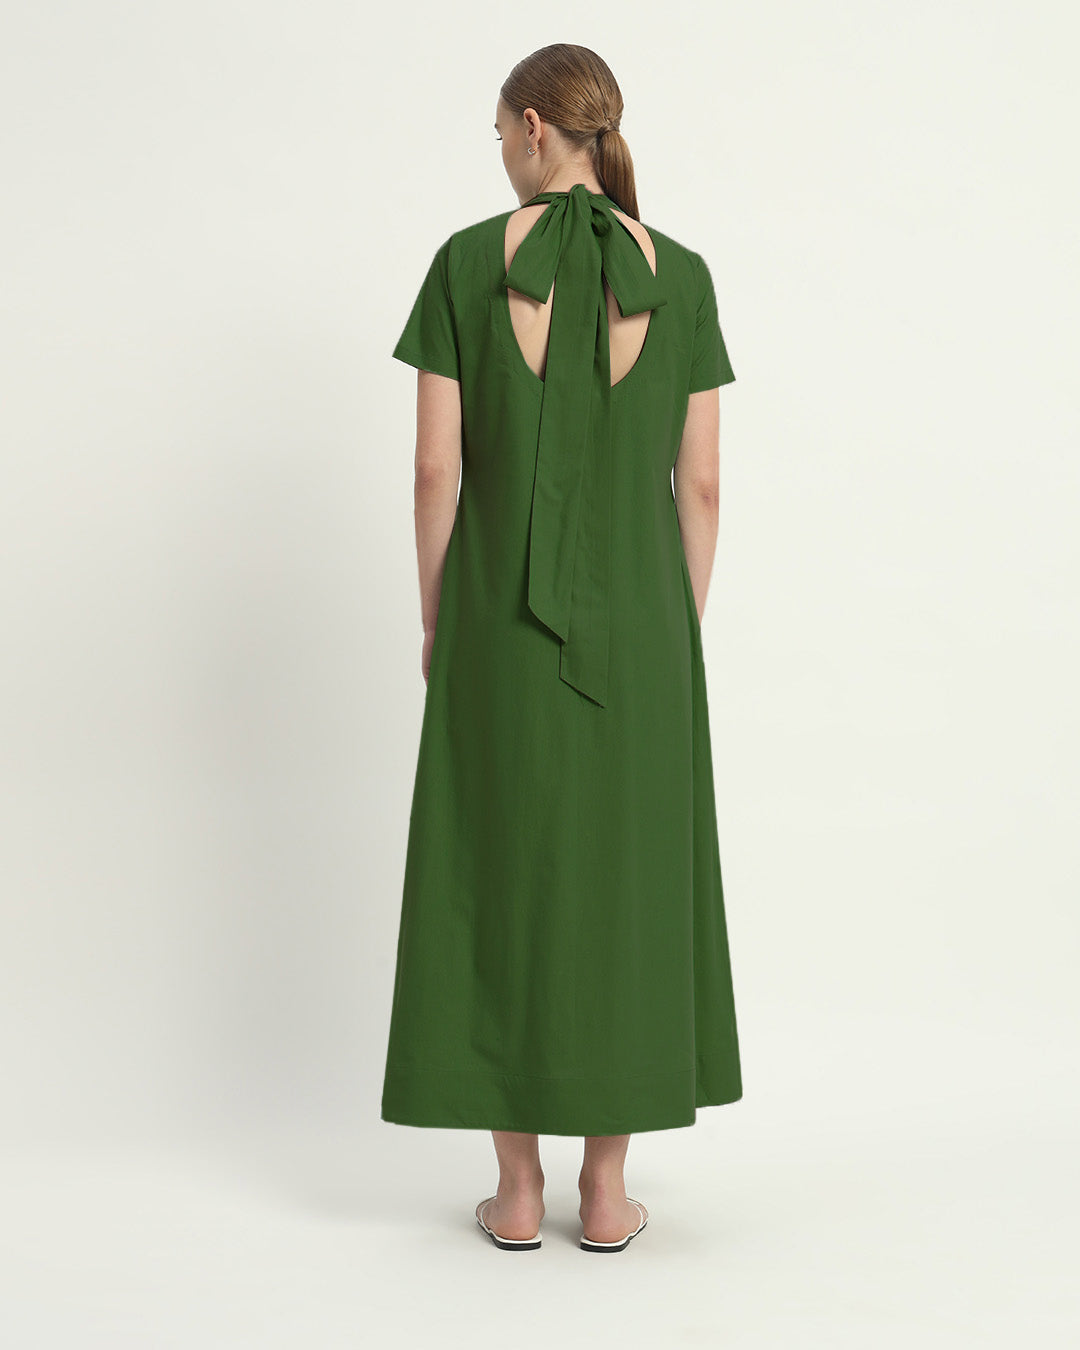 The Emerald Hermon Cotton Dress